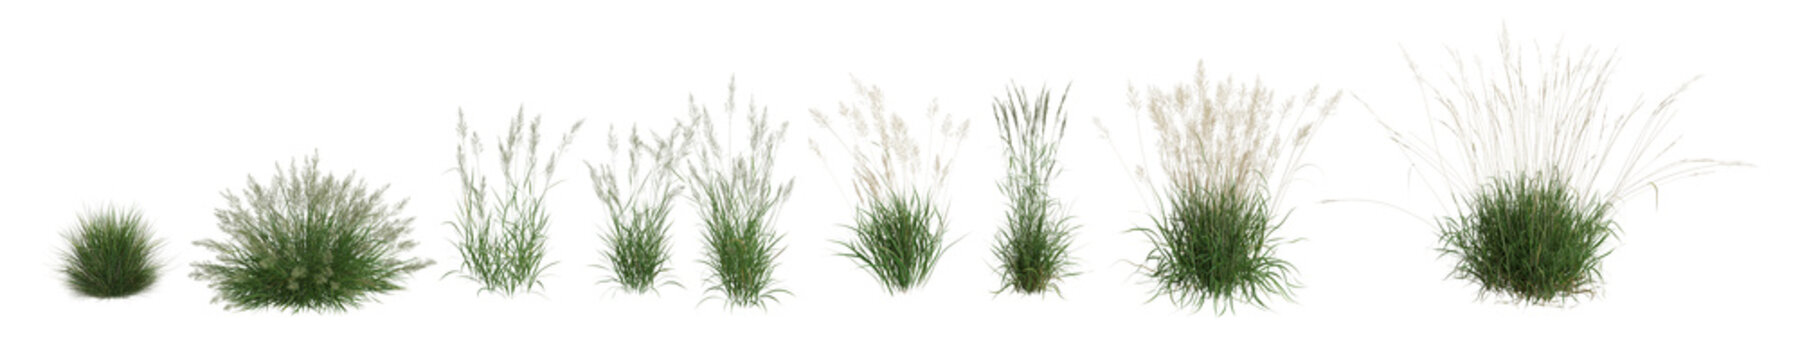 3d illustration of set calamagrostis arundinacea grass isolated on transparent background, human eye angle